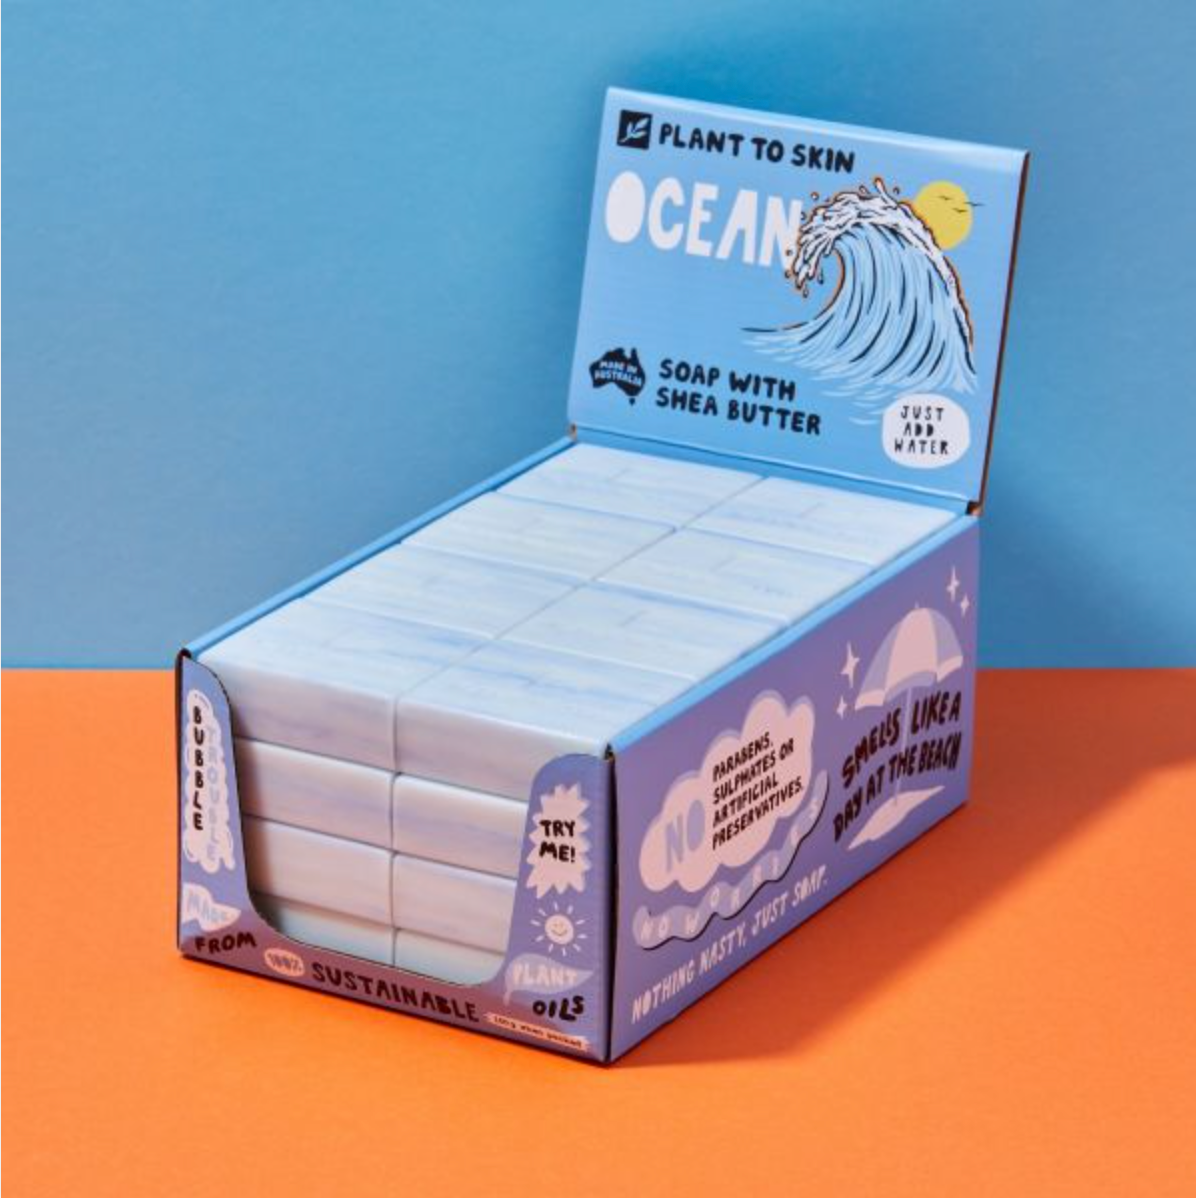 Plant to Skin Ocean Soap 32x100g Carton